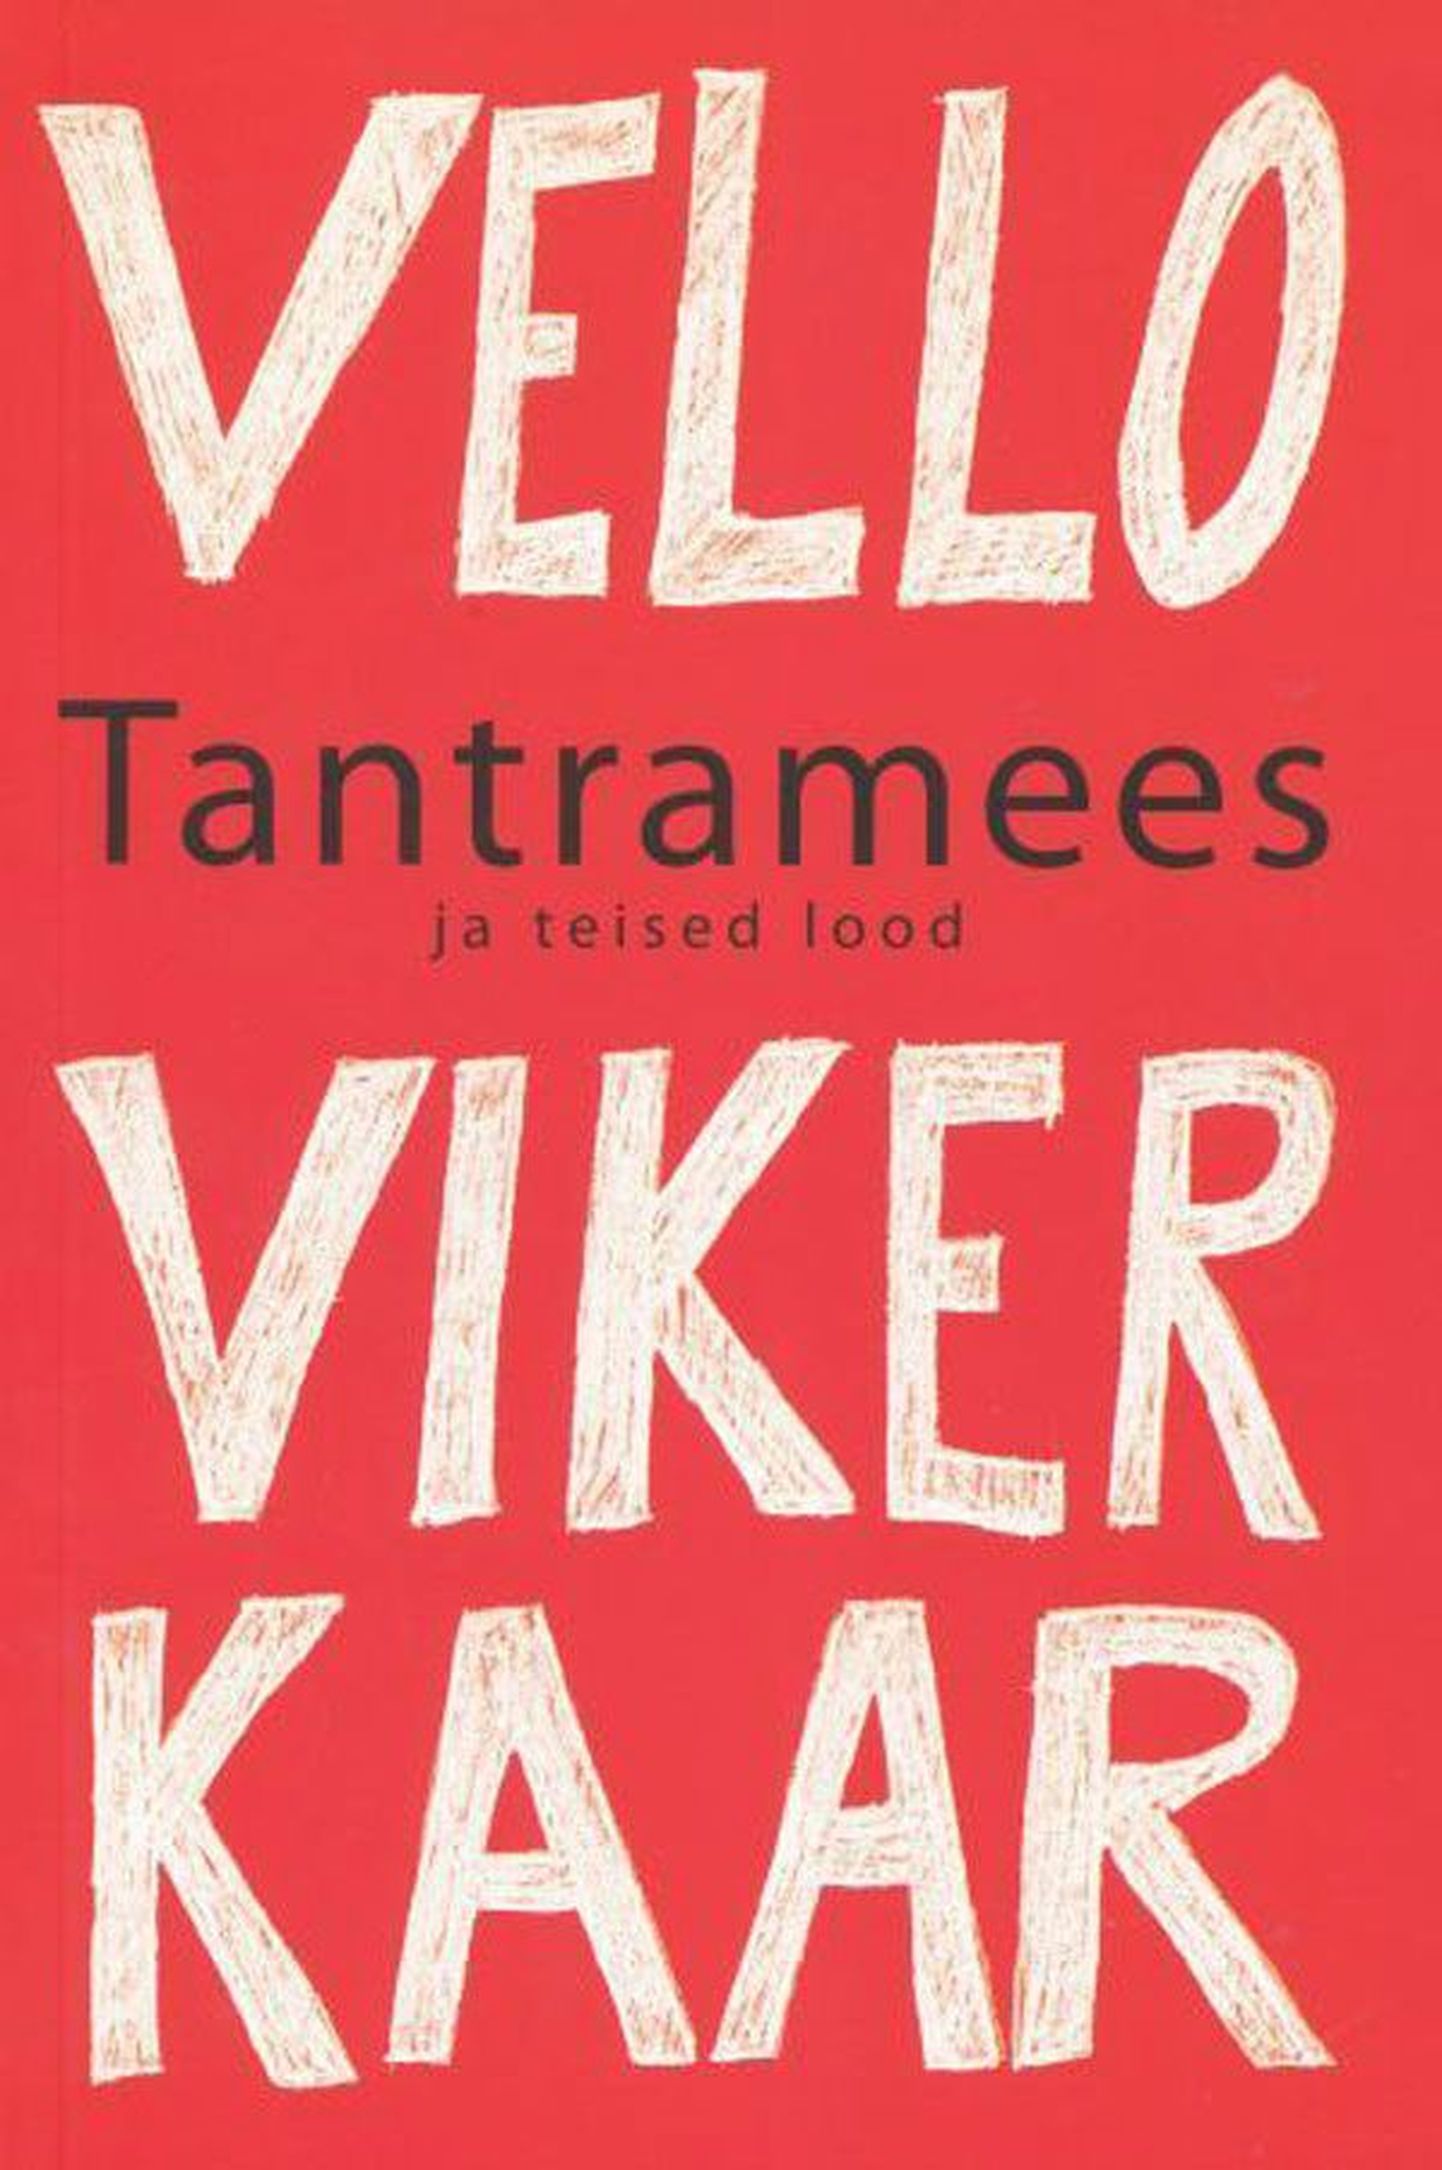 Raamat
Vello Vikerkaar 
«Tantra­mees»
2013
279 lk